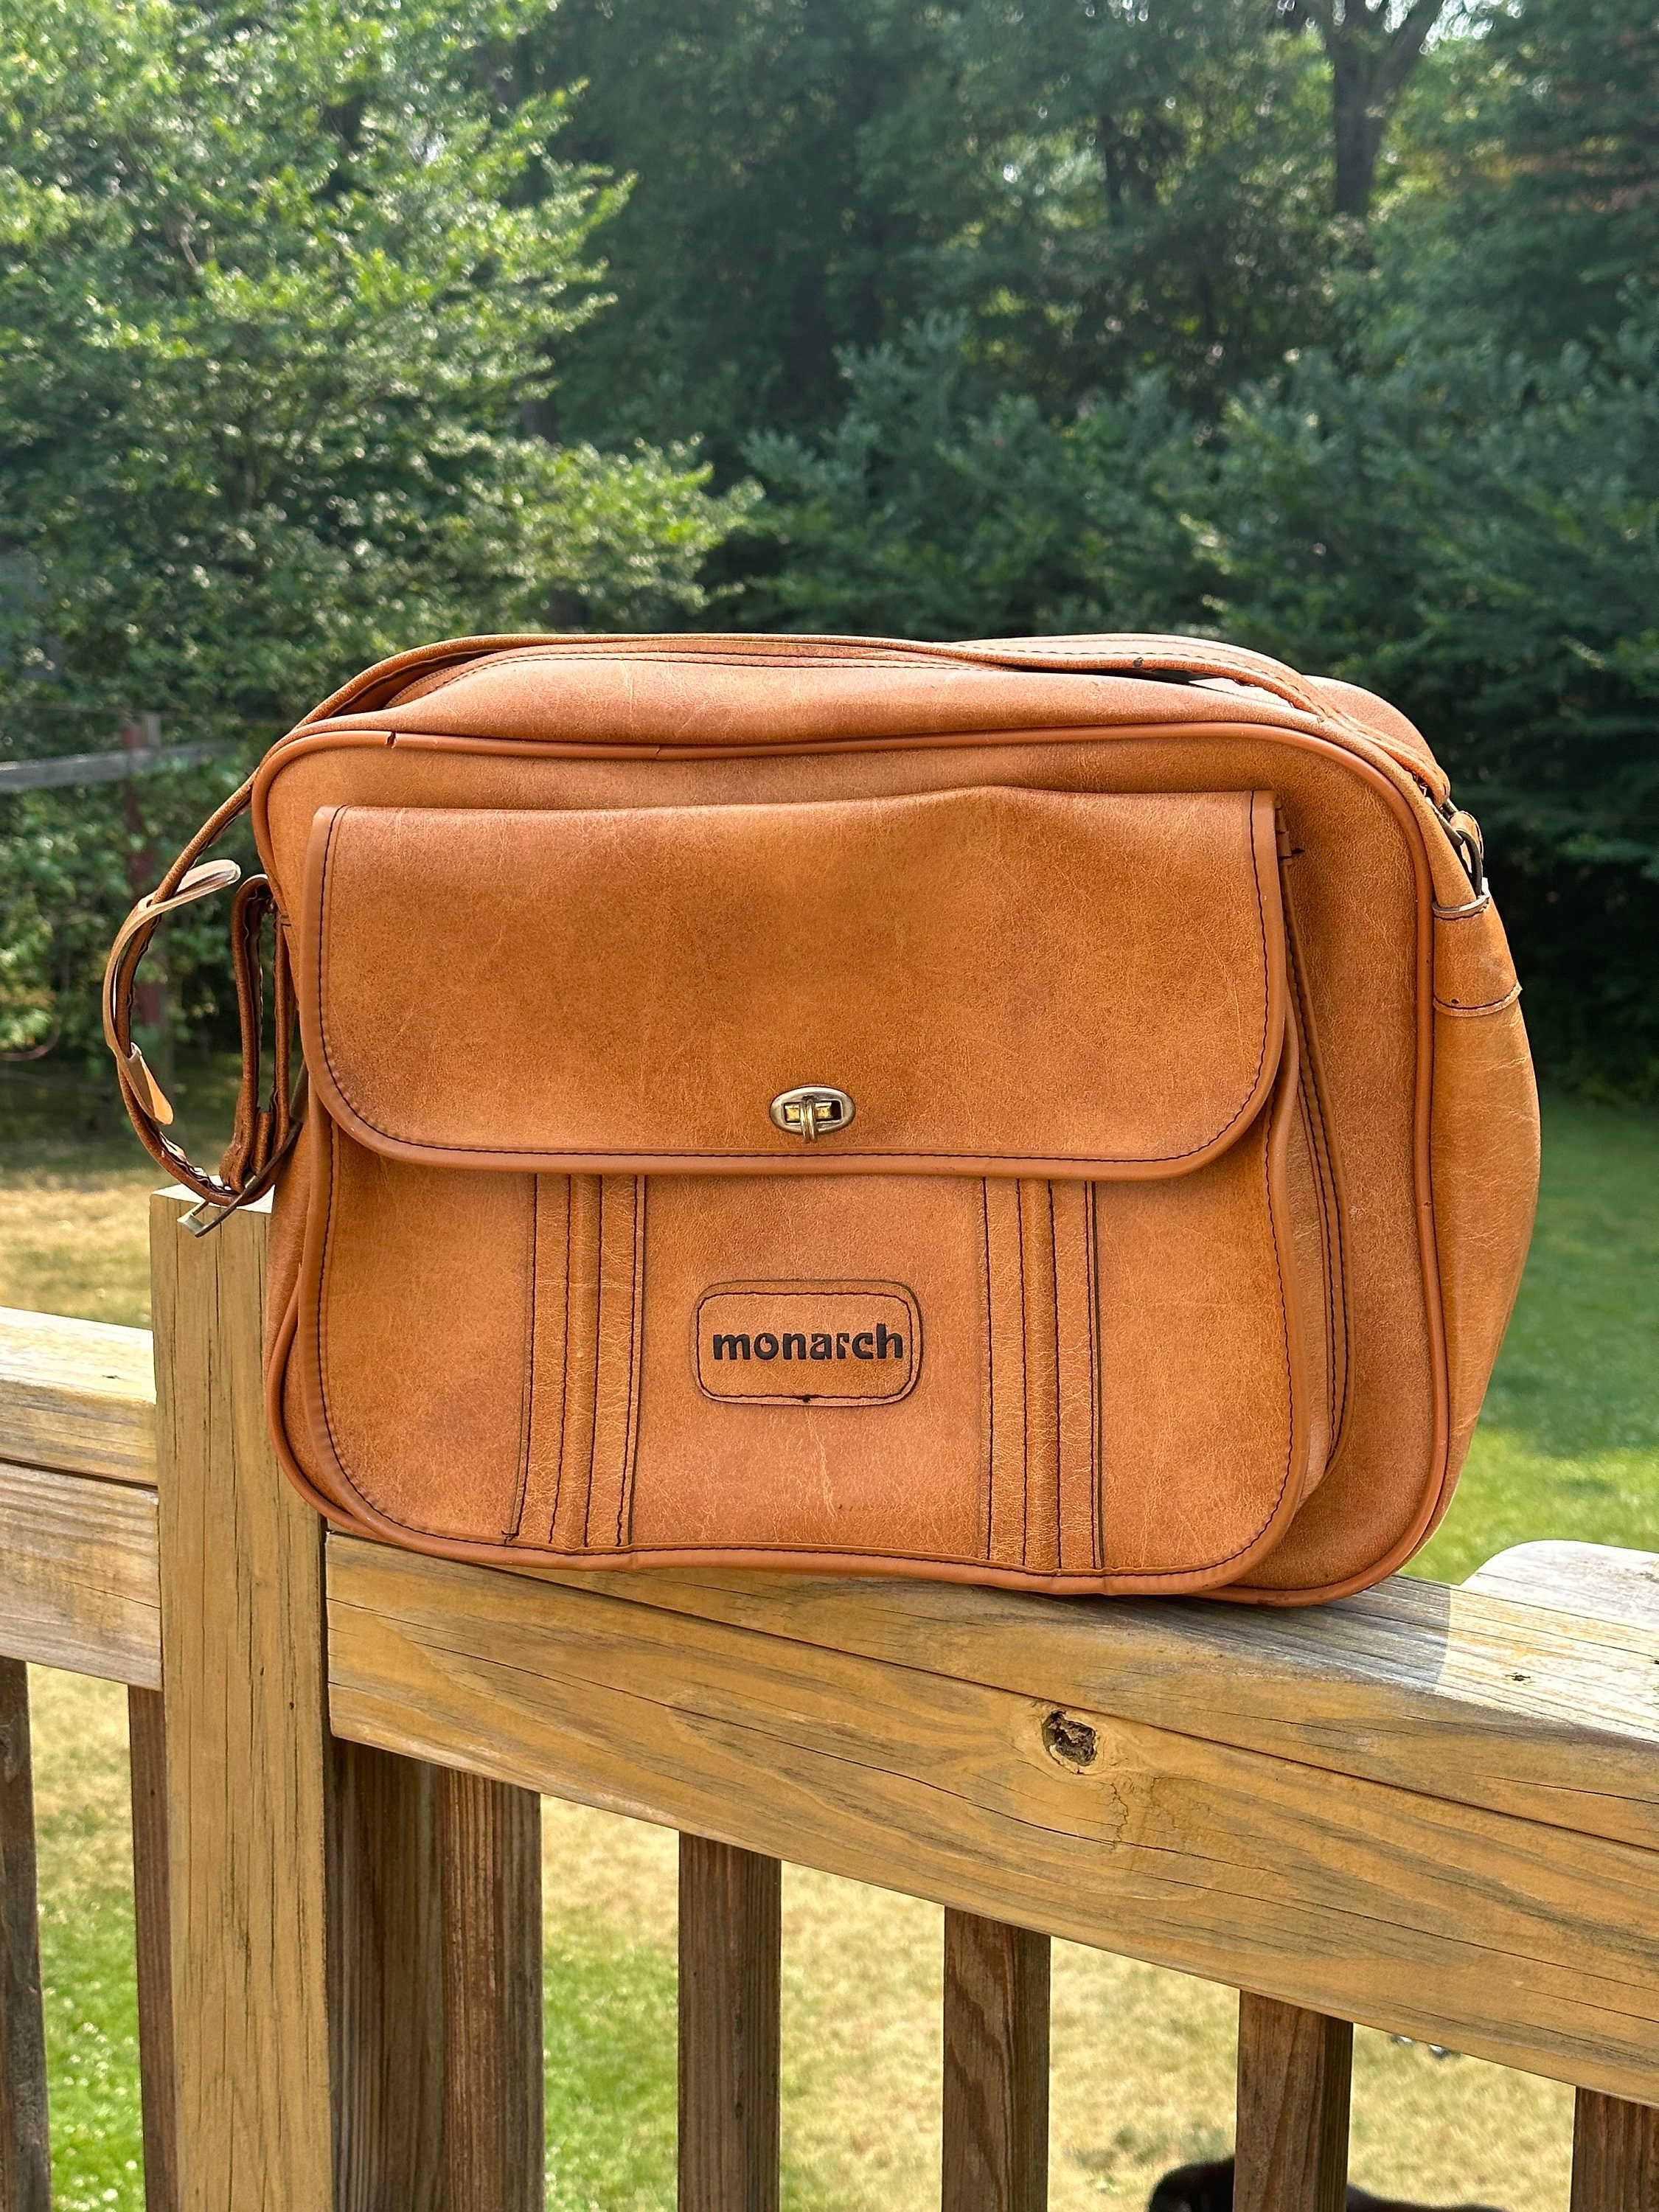 Monarch Business Bag | EverythingBranded USA